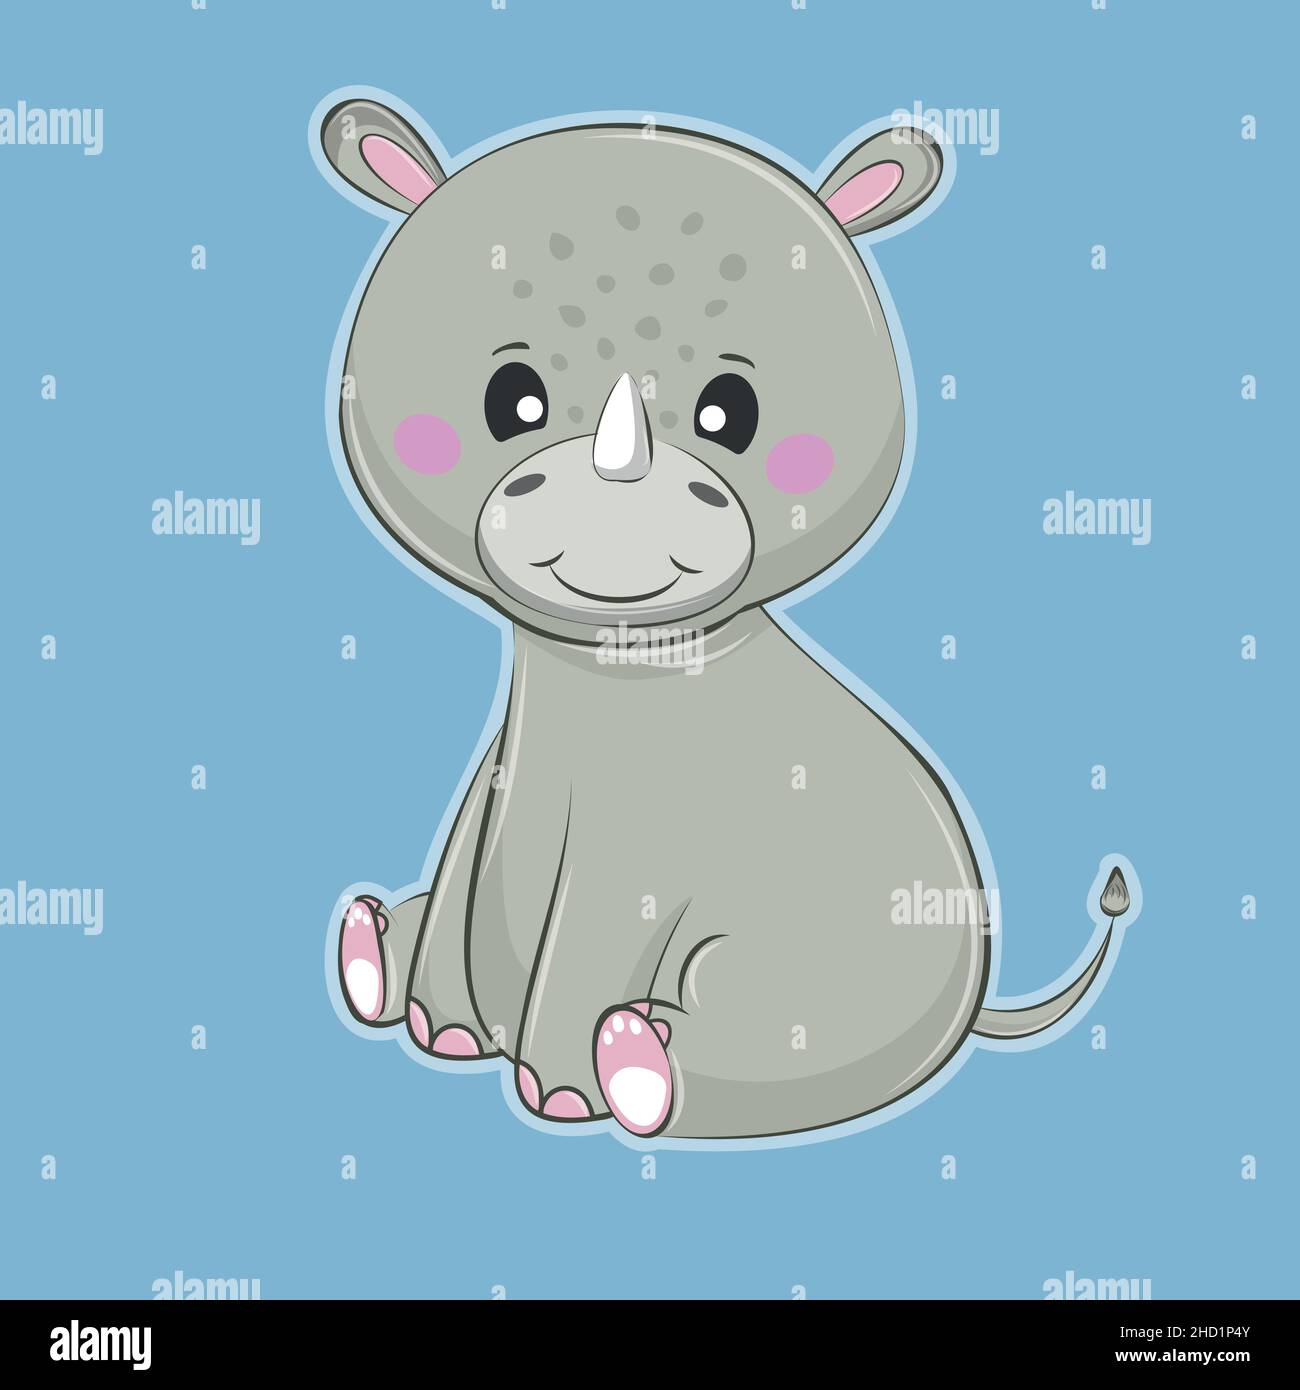 Cute fun cartoon baby rhinoceros on a blue background. Stock Vector